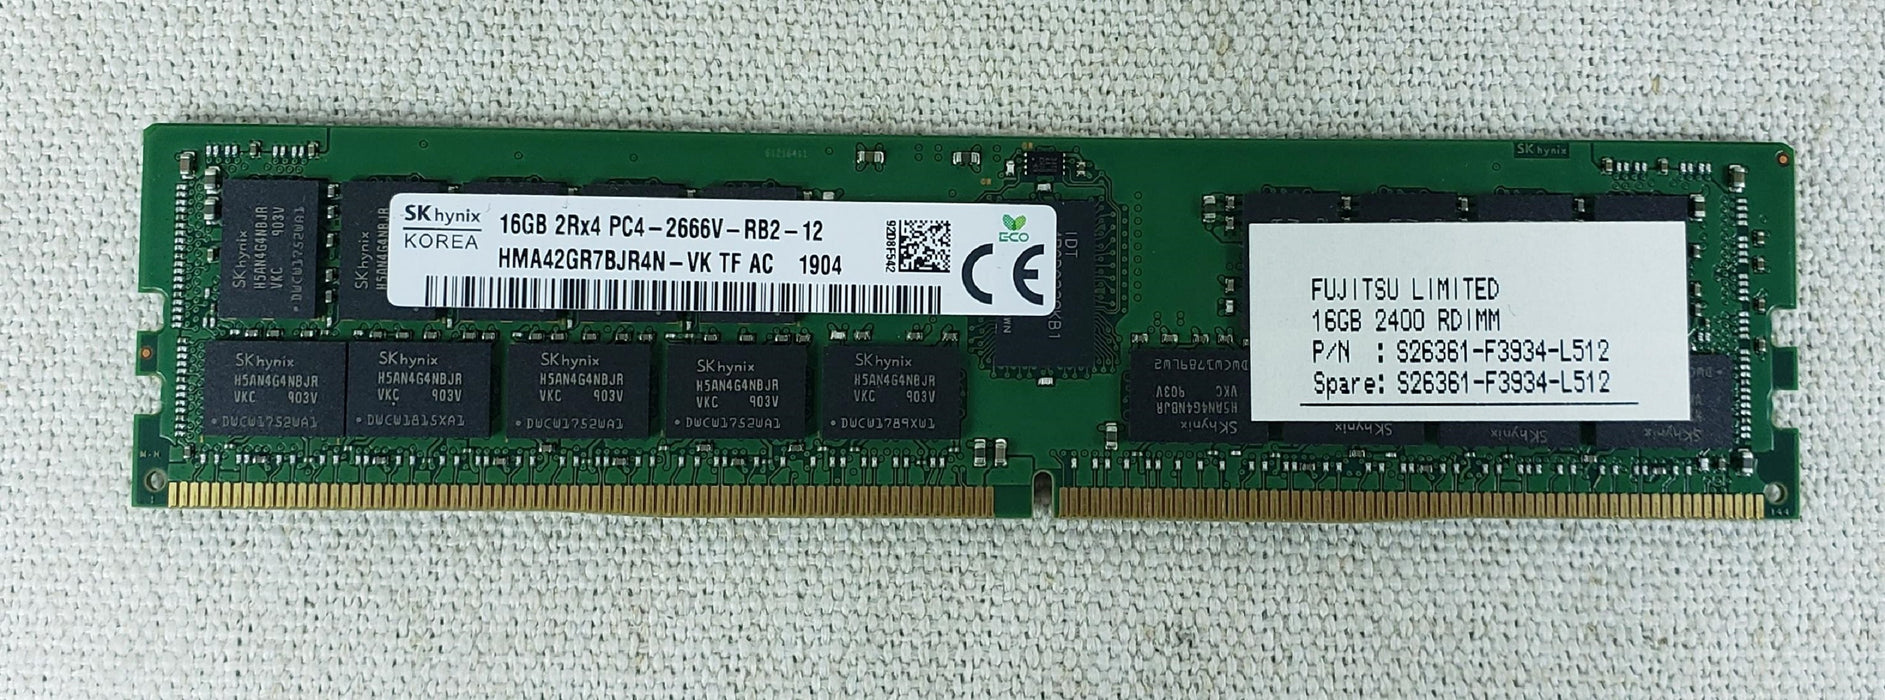 Hynix HMA42GR7BJR4N-VK 16GB PC4-2666V DDR4-21400 ECC Server Memory